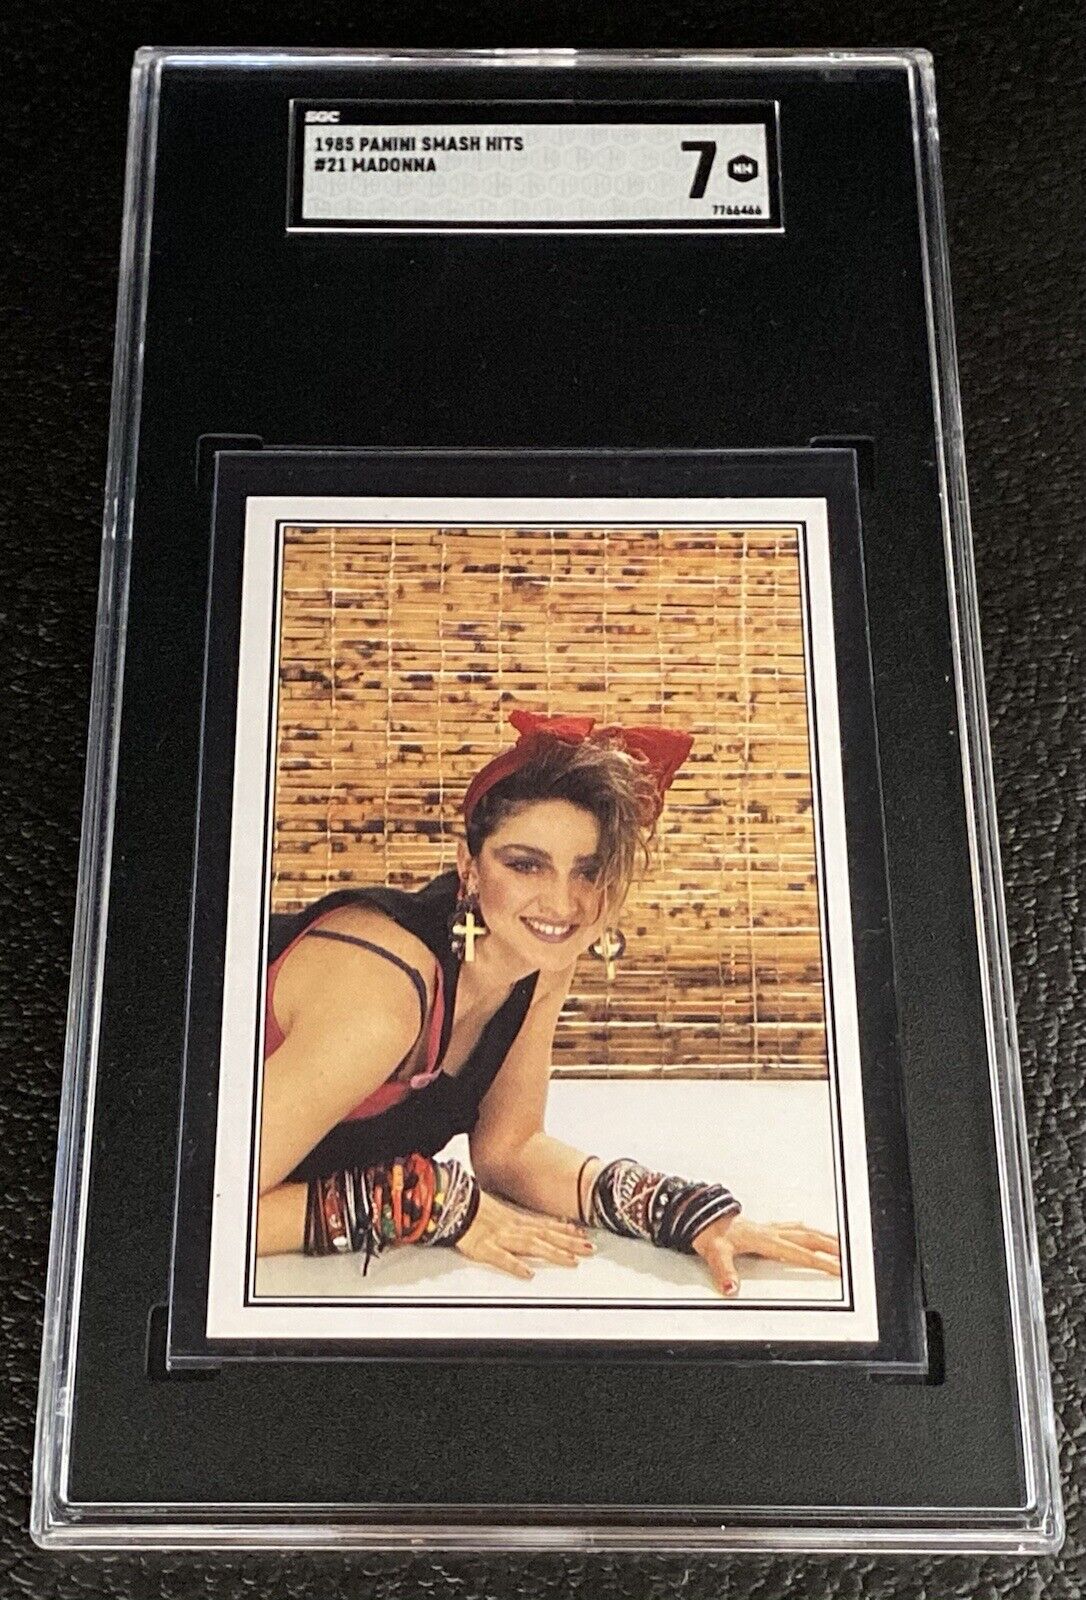 SGC 7 Madonna Rookie Card 1985 Panini Smash Hits Collection Low Pop Music HOF 21